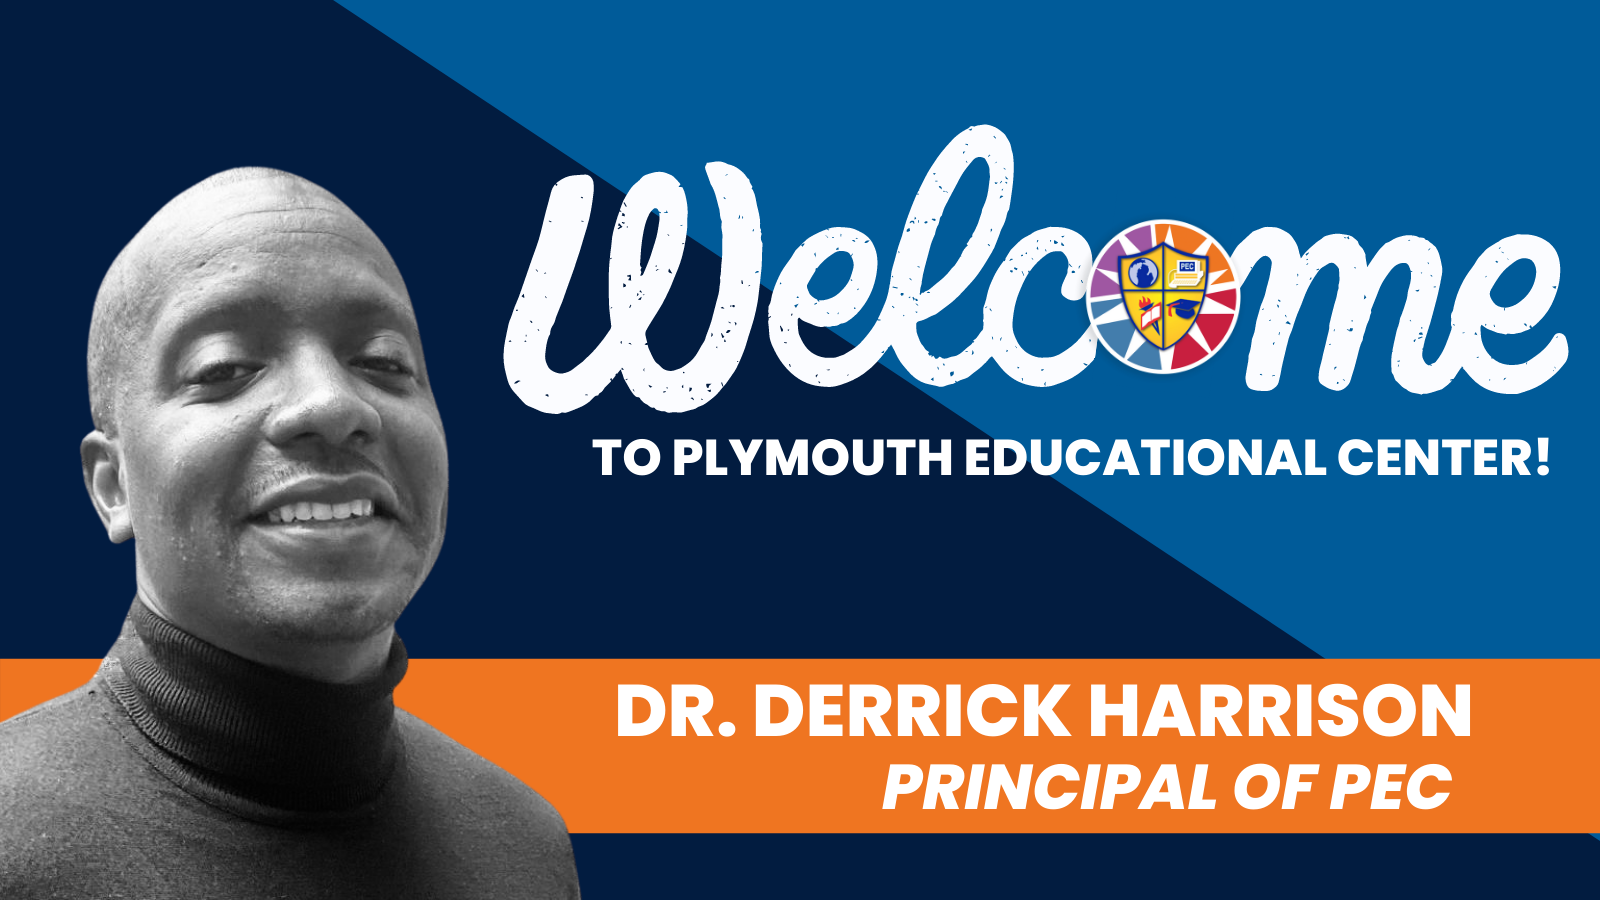 Welcome Dr. Derrick Harrison!